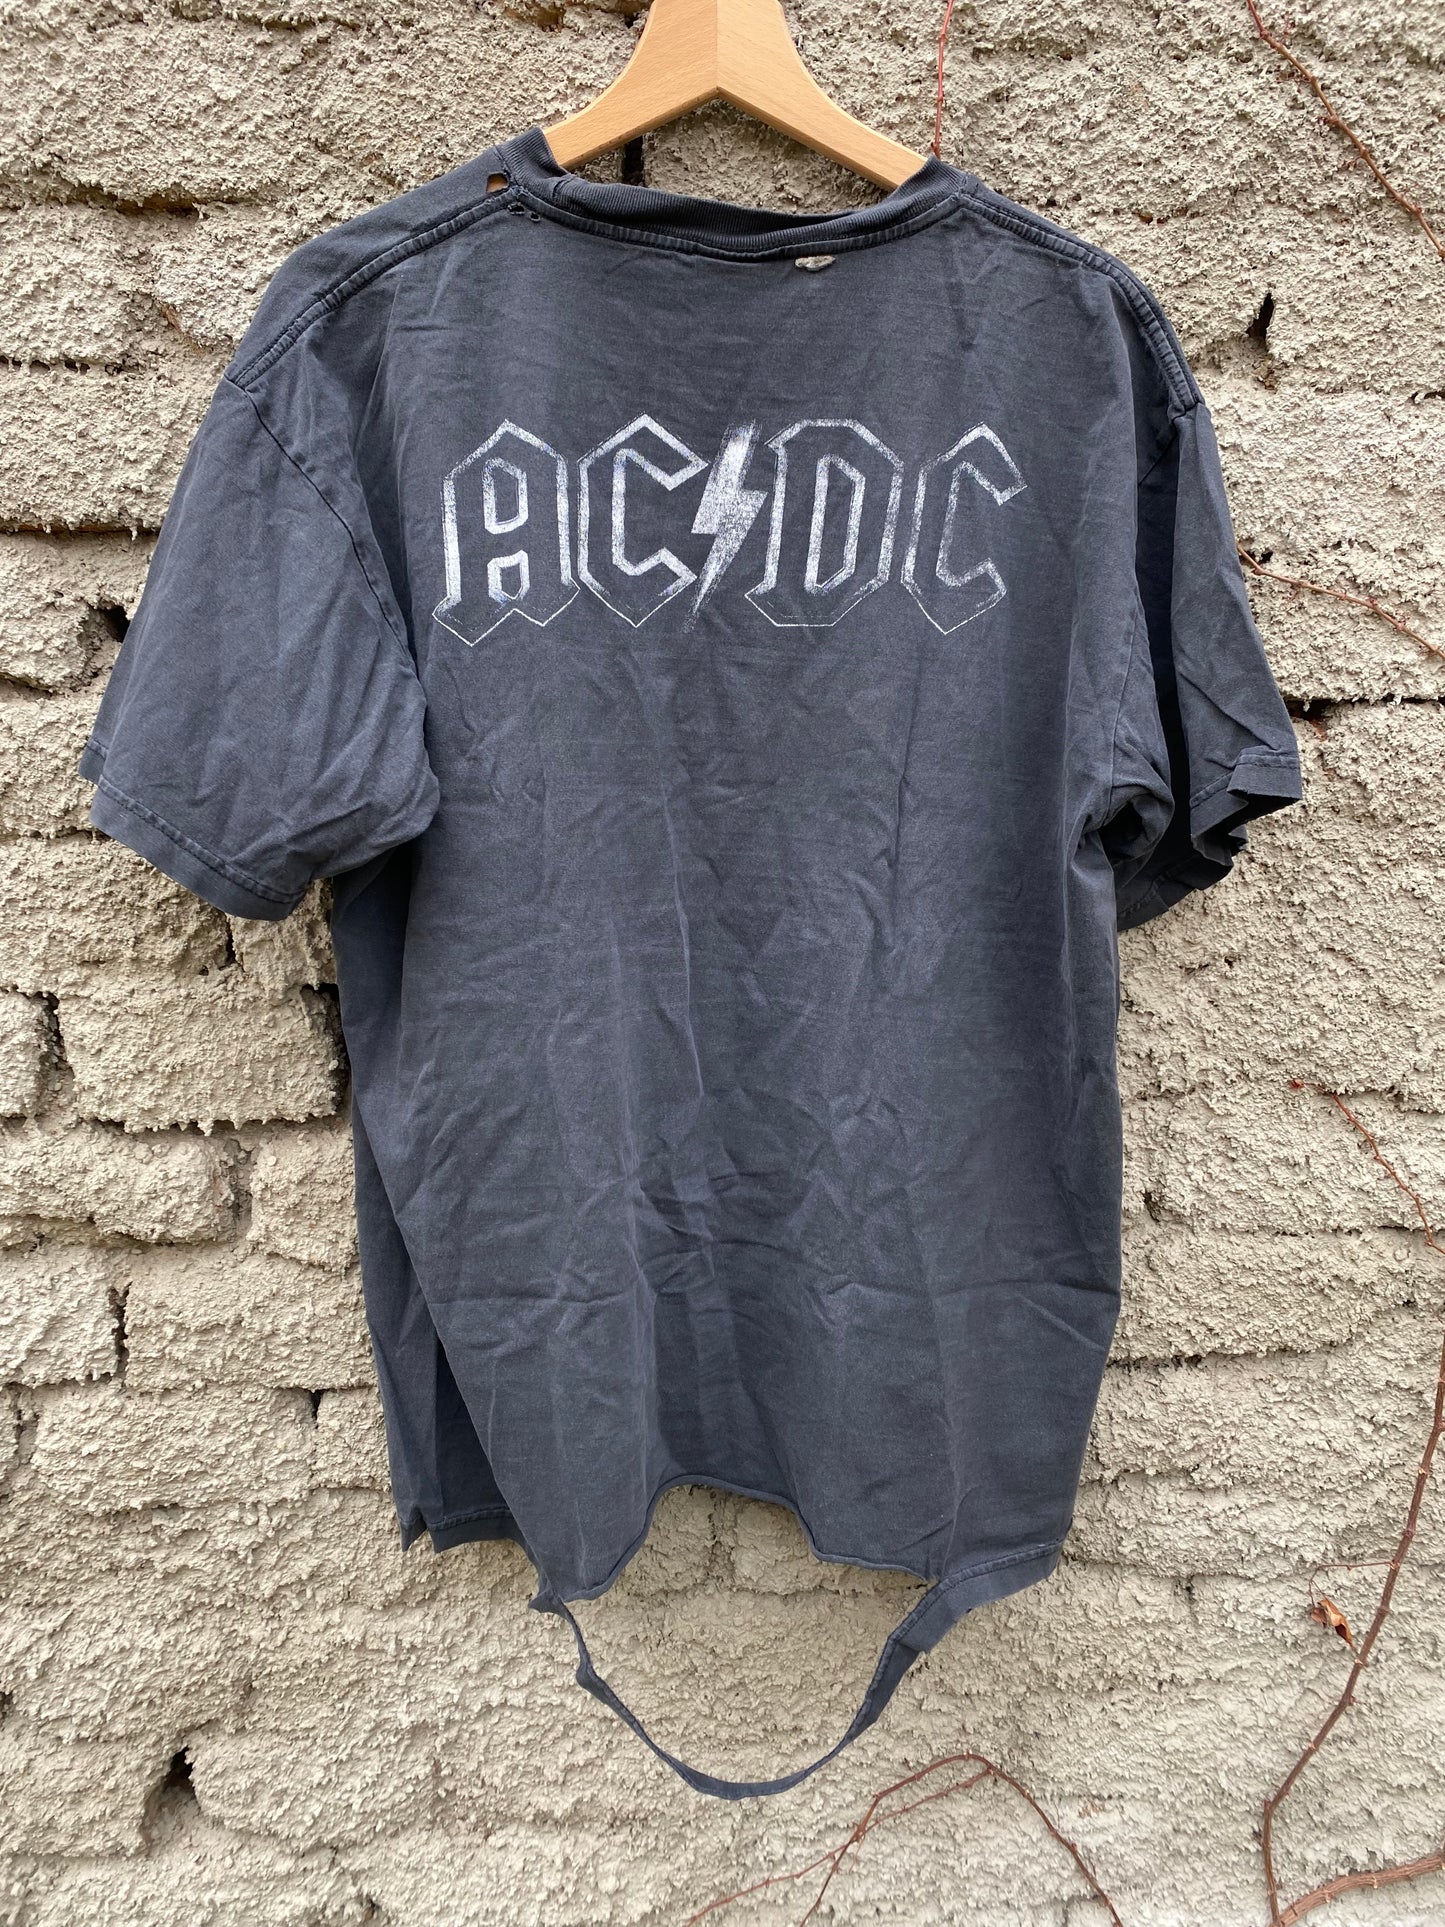 Vintage AC DC "Return to Rock" distressed t-shirt - size XL